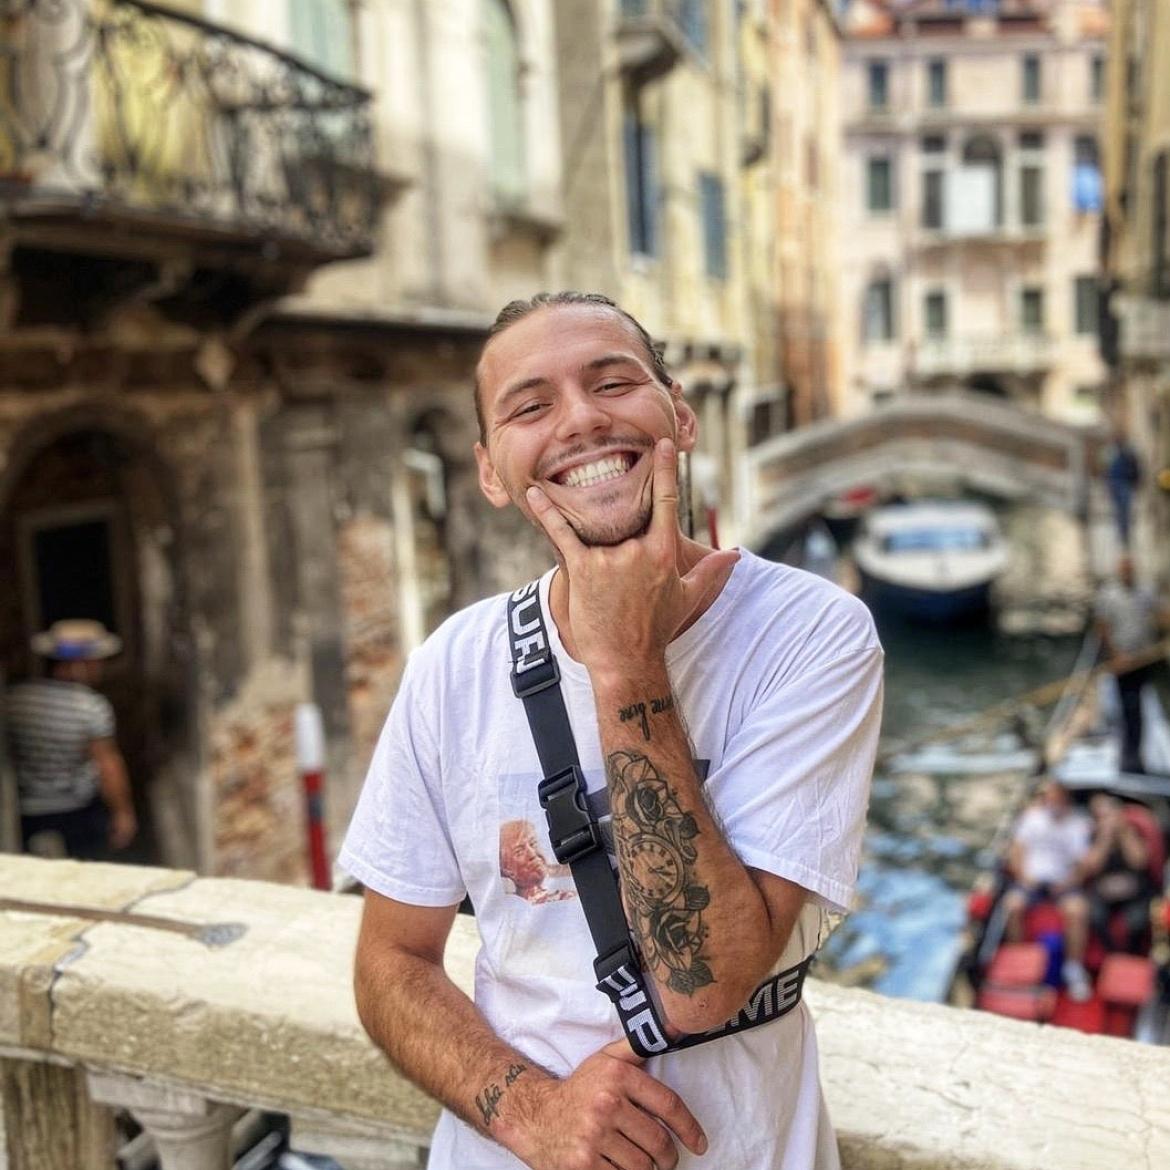 Boy, white t-shirt, boy with tattoos, Venice, Italy, Venice canal, city